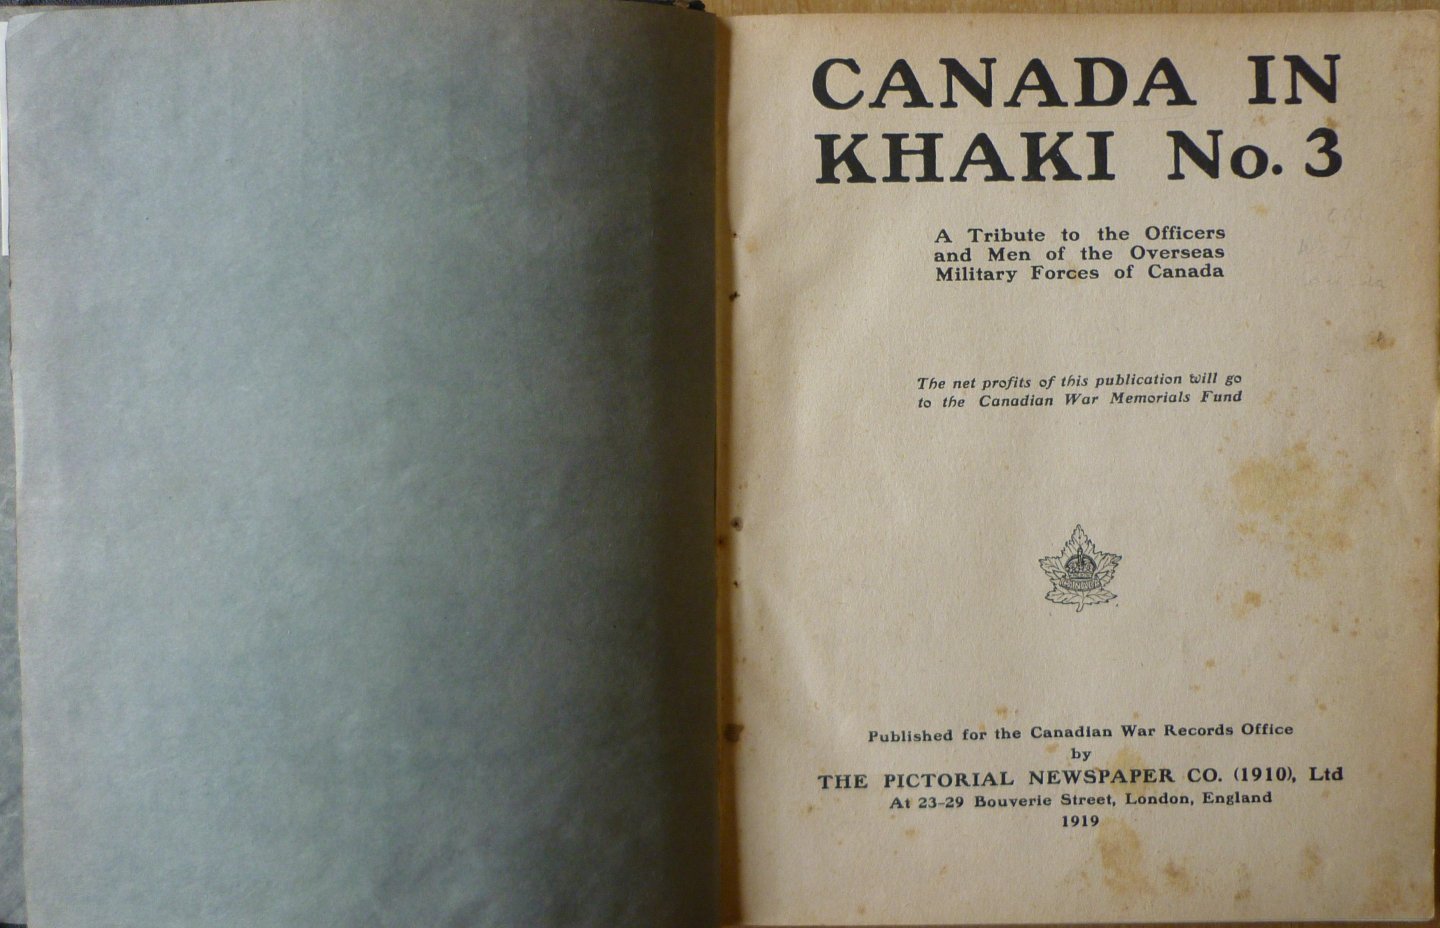  - Canada in khaki No. 3